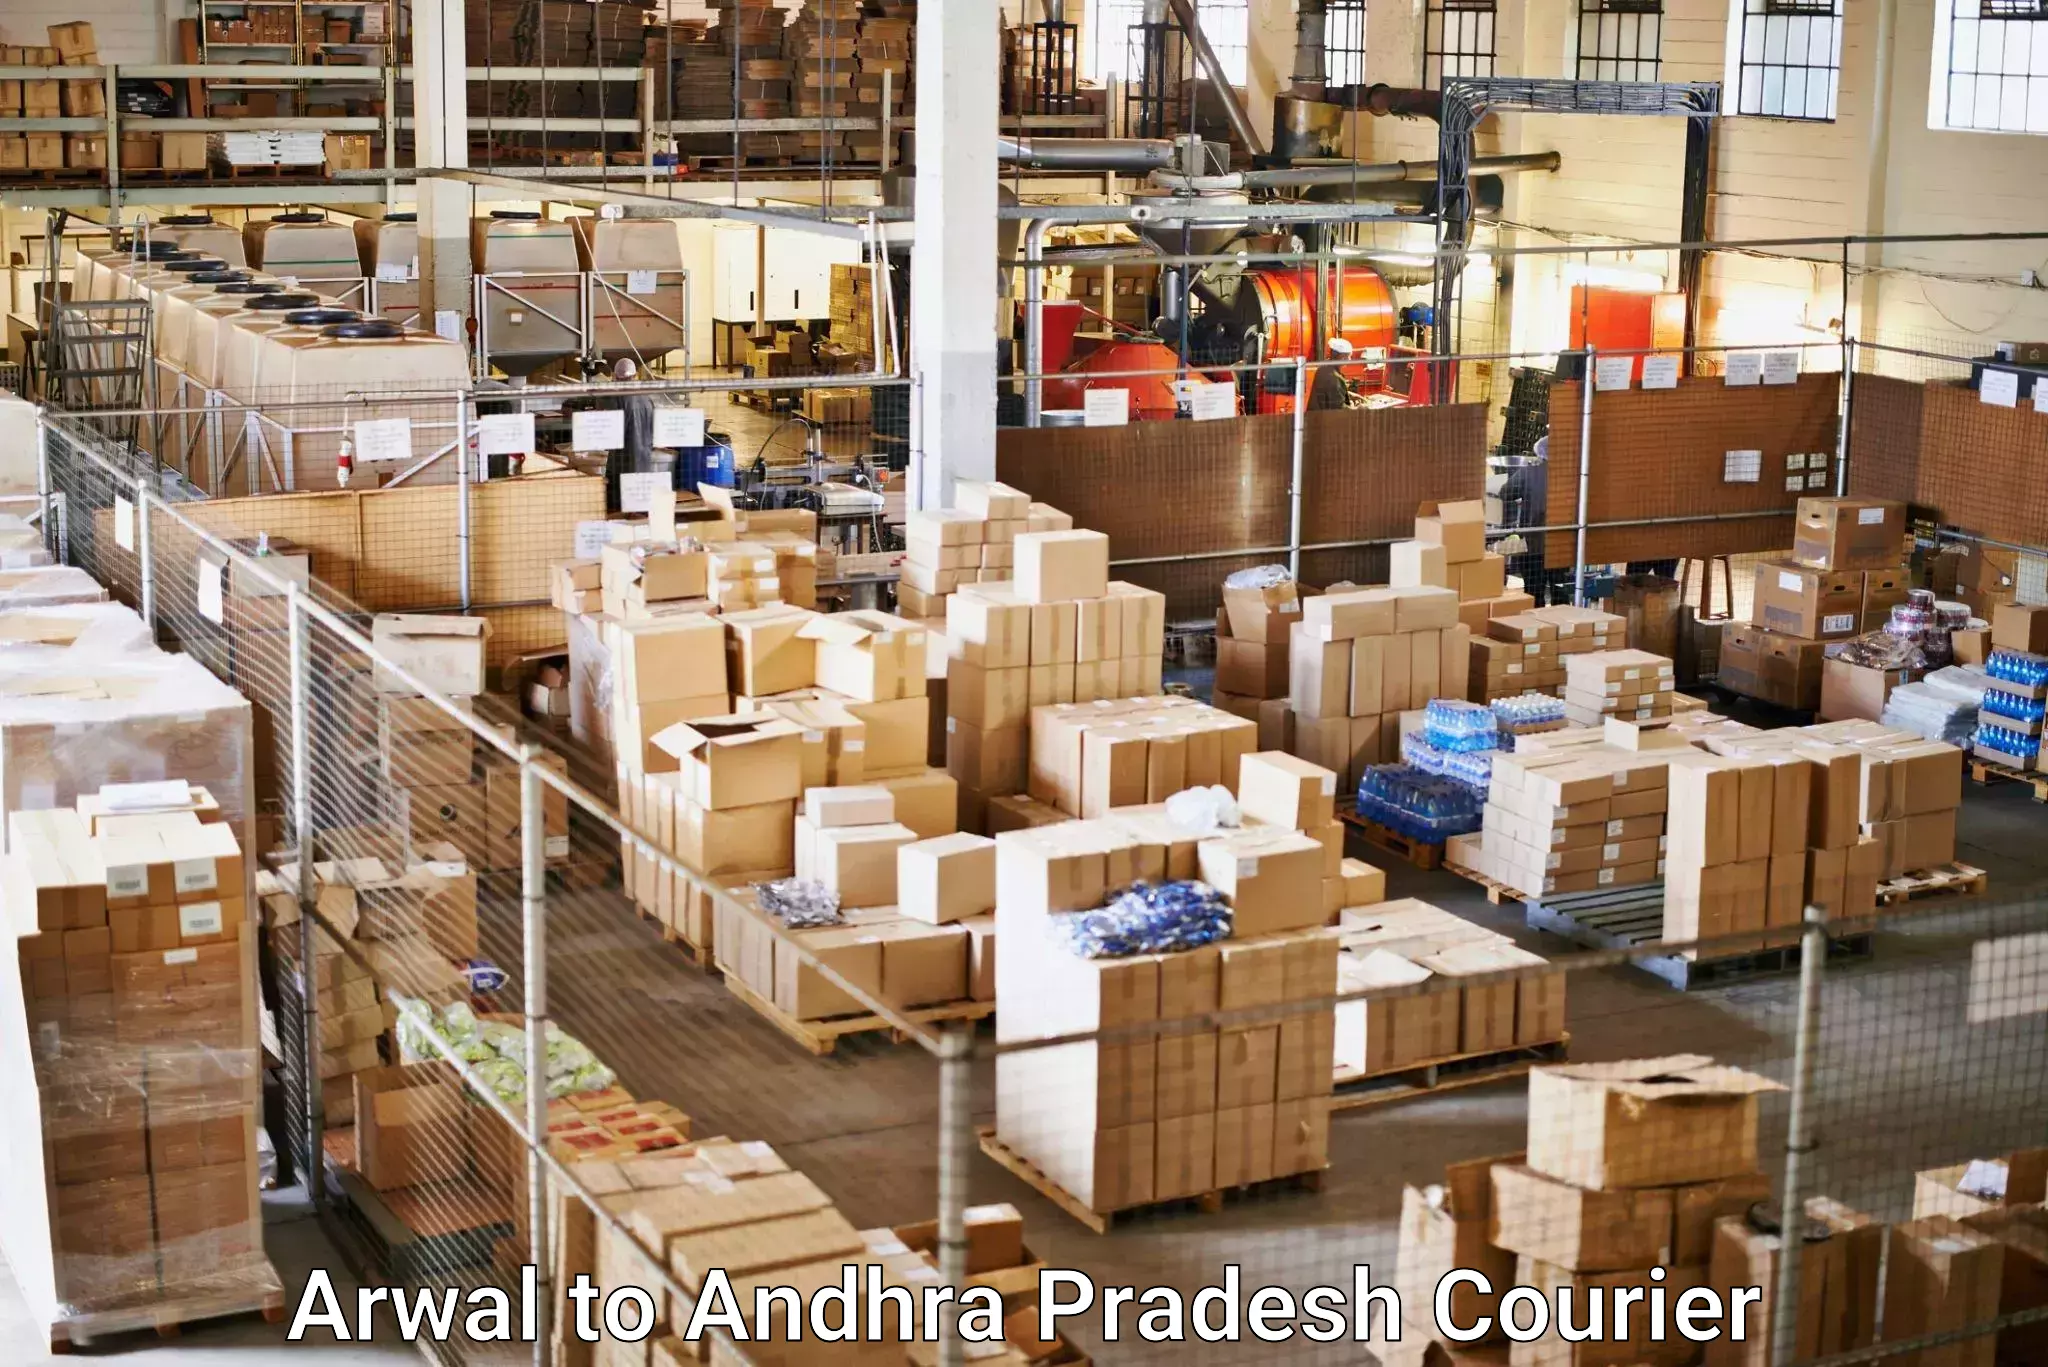 Cash on delivery service Arwal to Tirupati